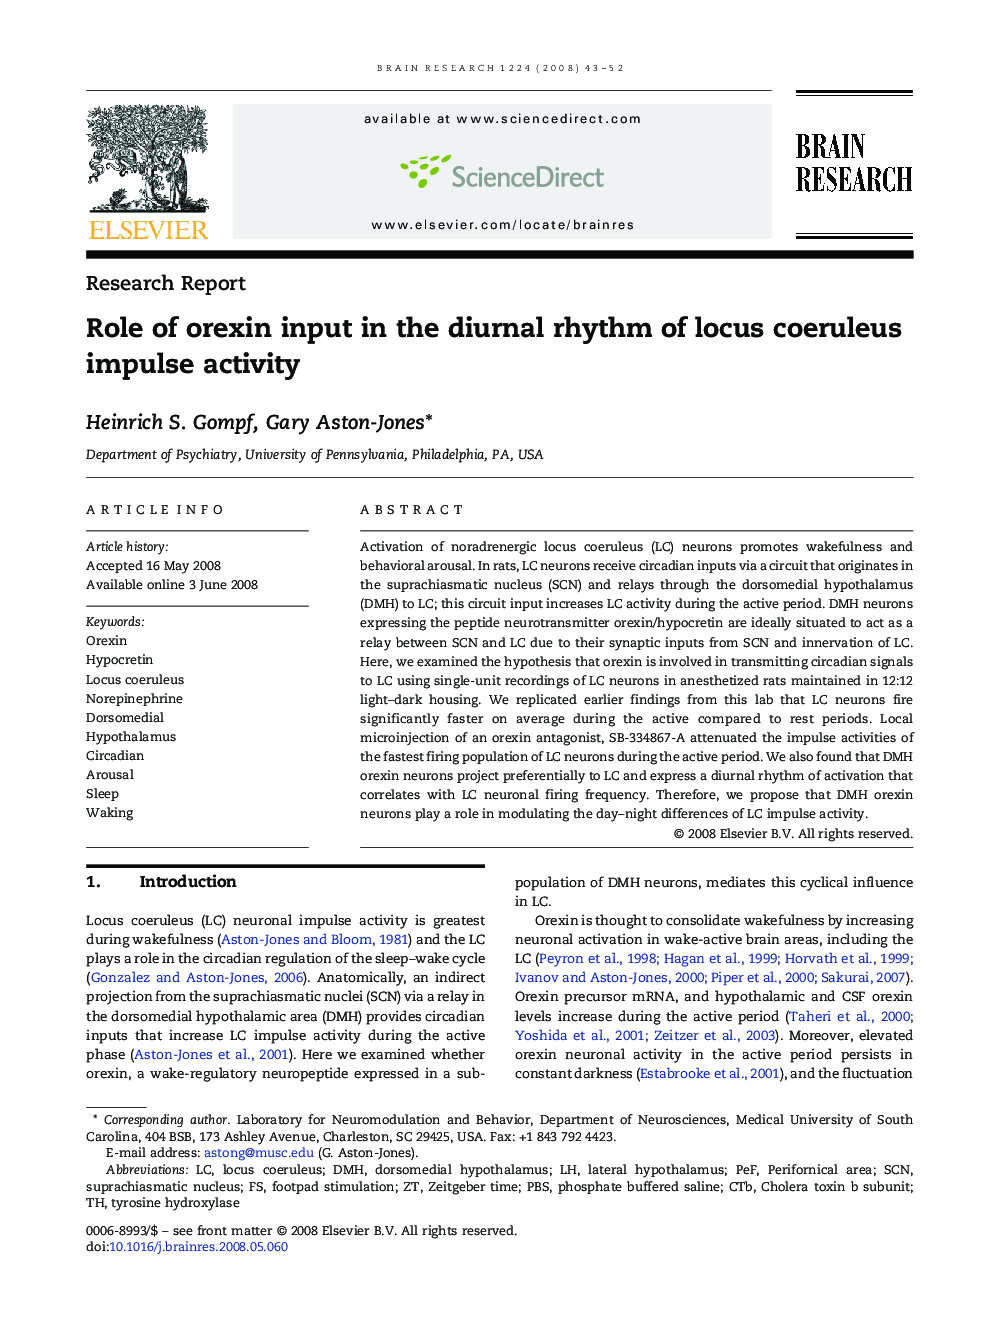 Role of orexin input in the diurnal rhythm of locus coeruleus impulse activity